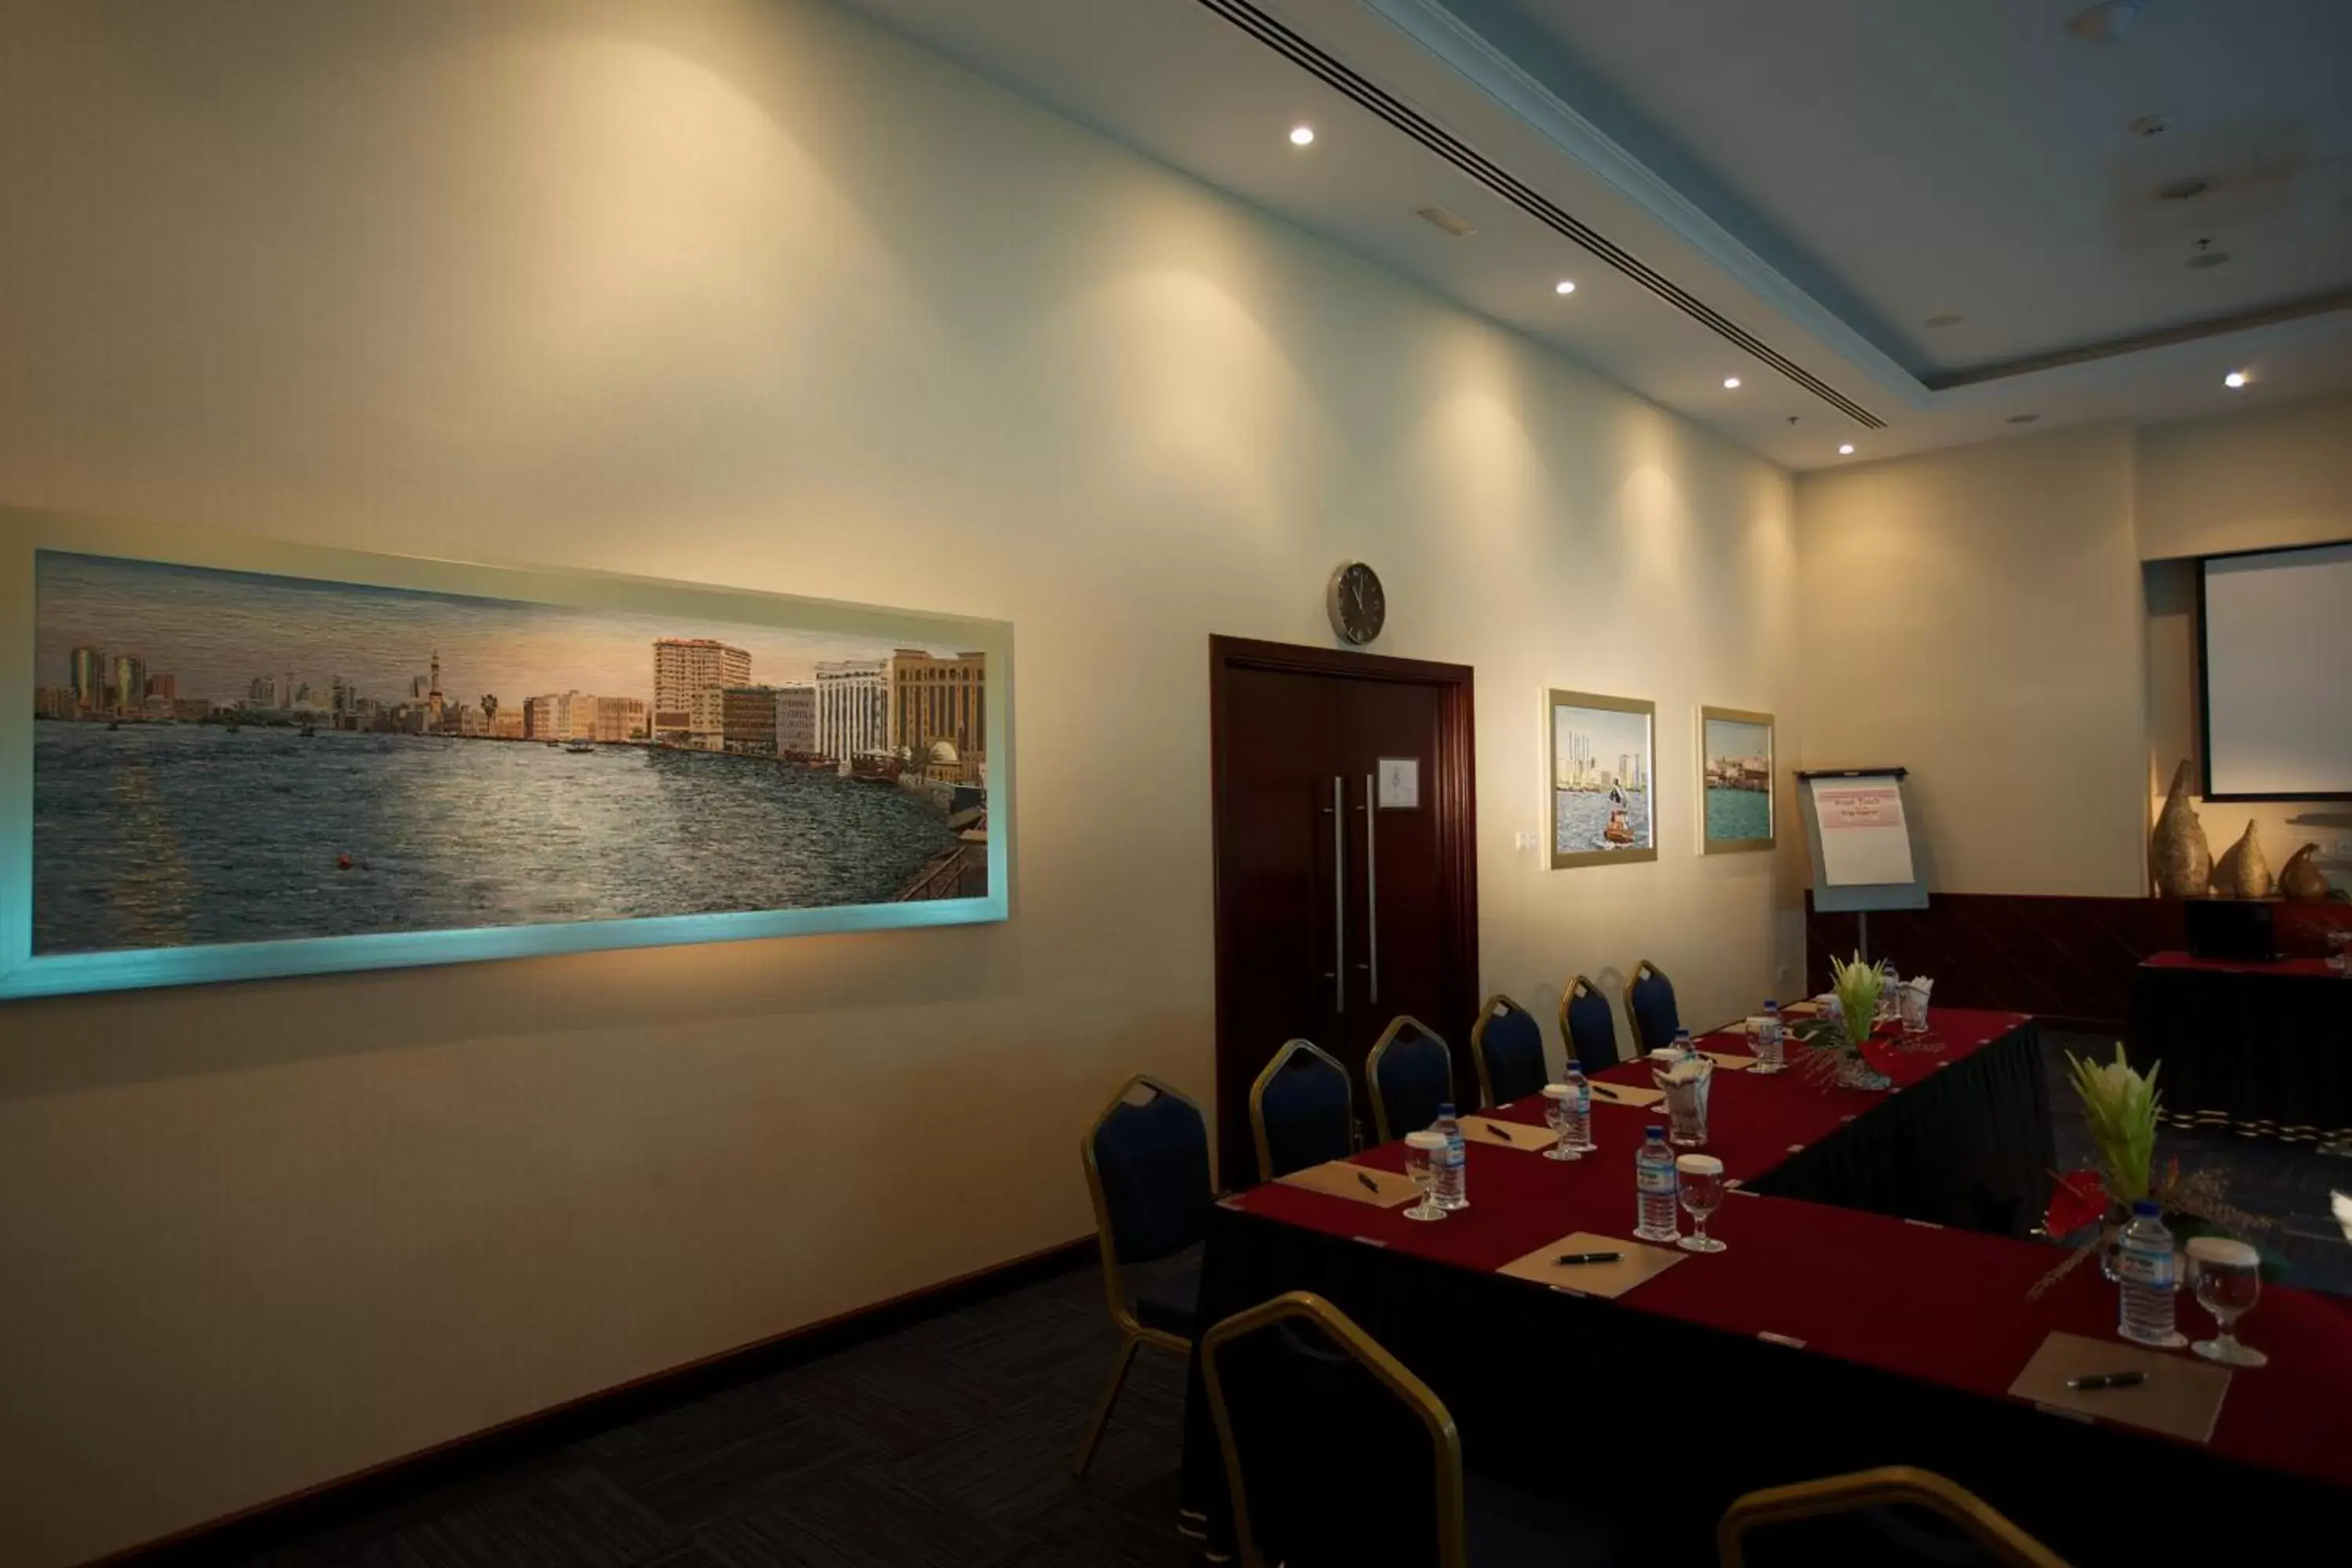 Business facilities in Tamani Marina Hotel & Apartments